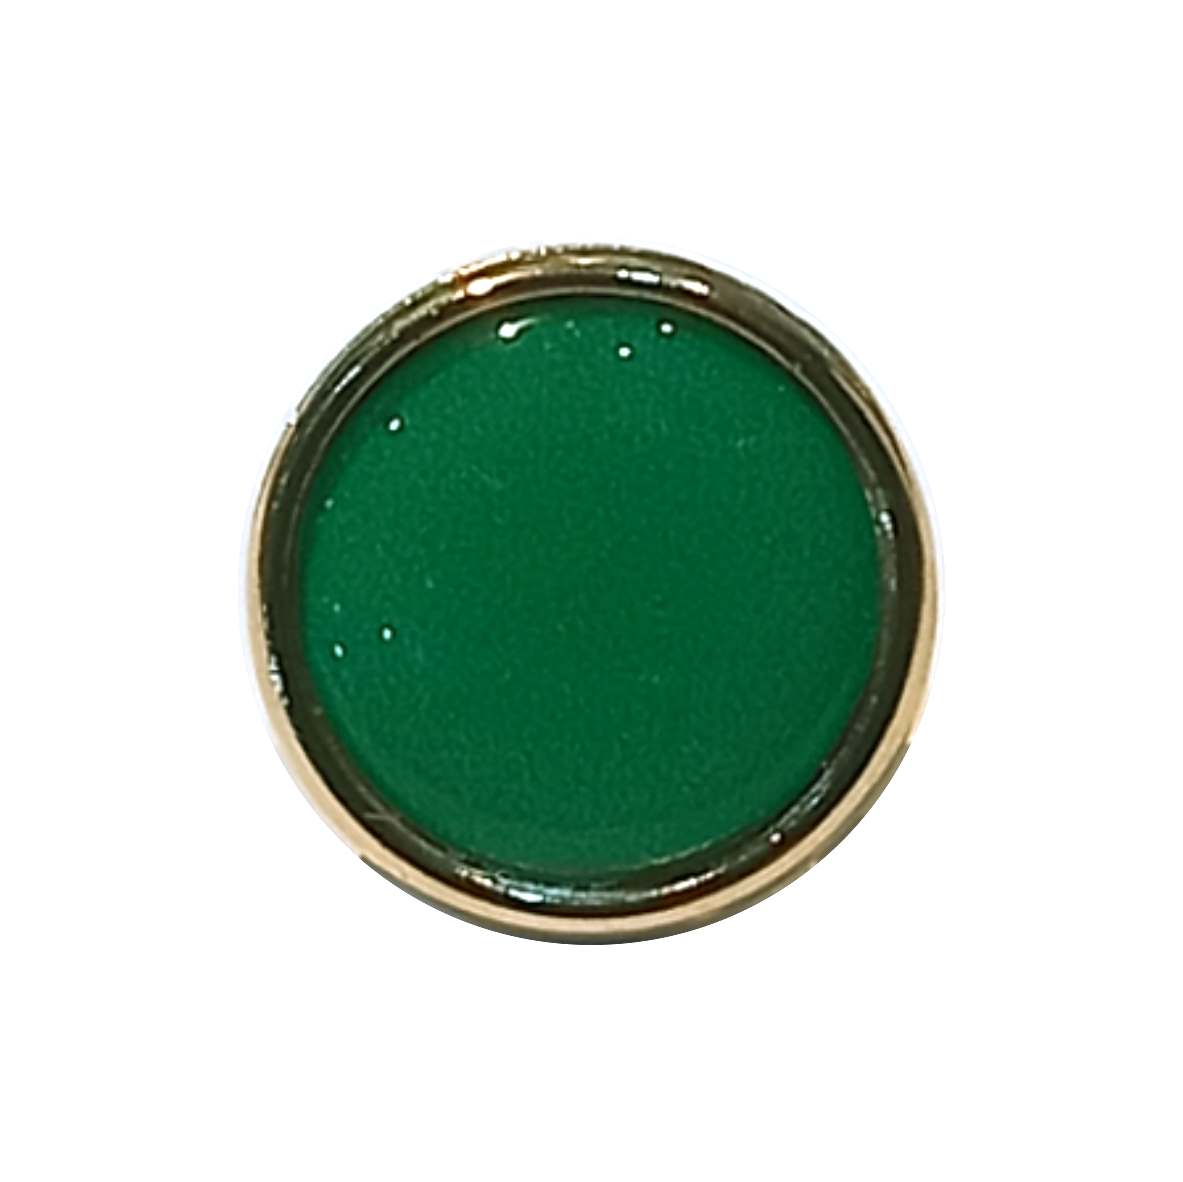 Emerald Green 20mm badge